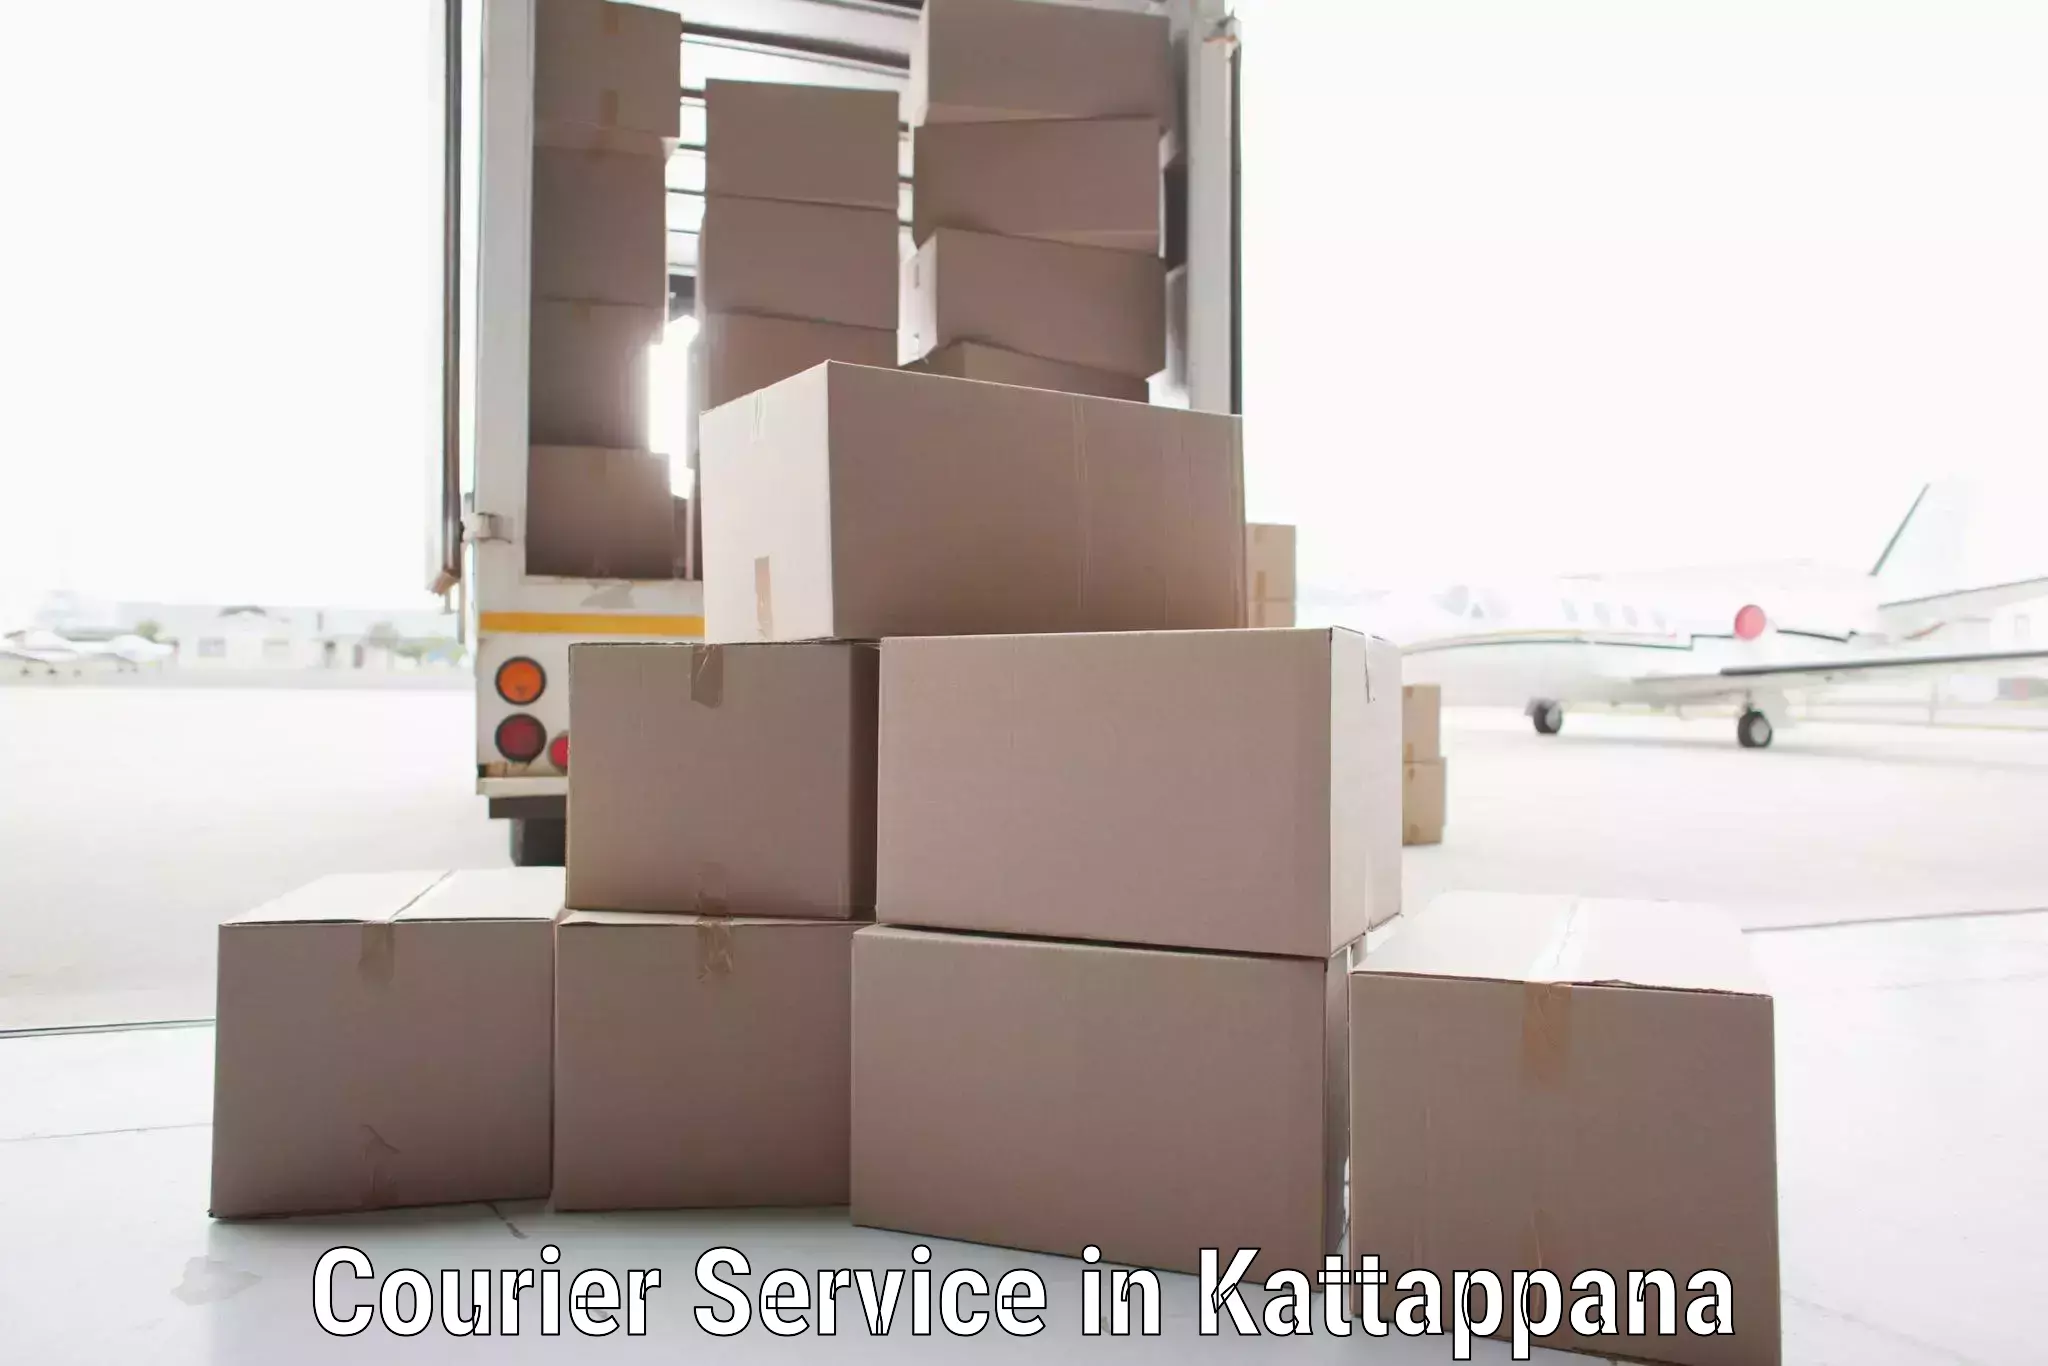 International parcel service in Kattappana